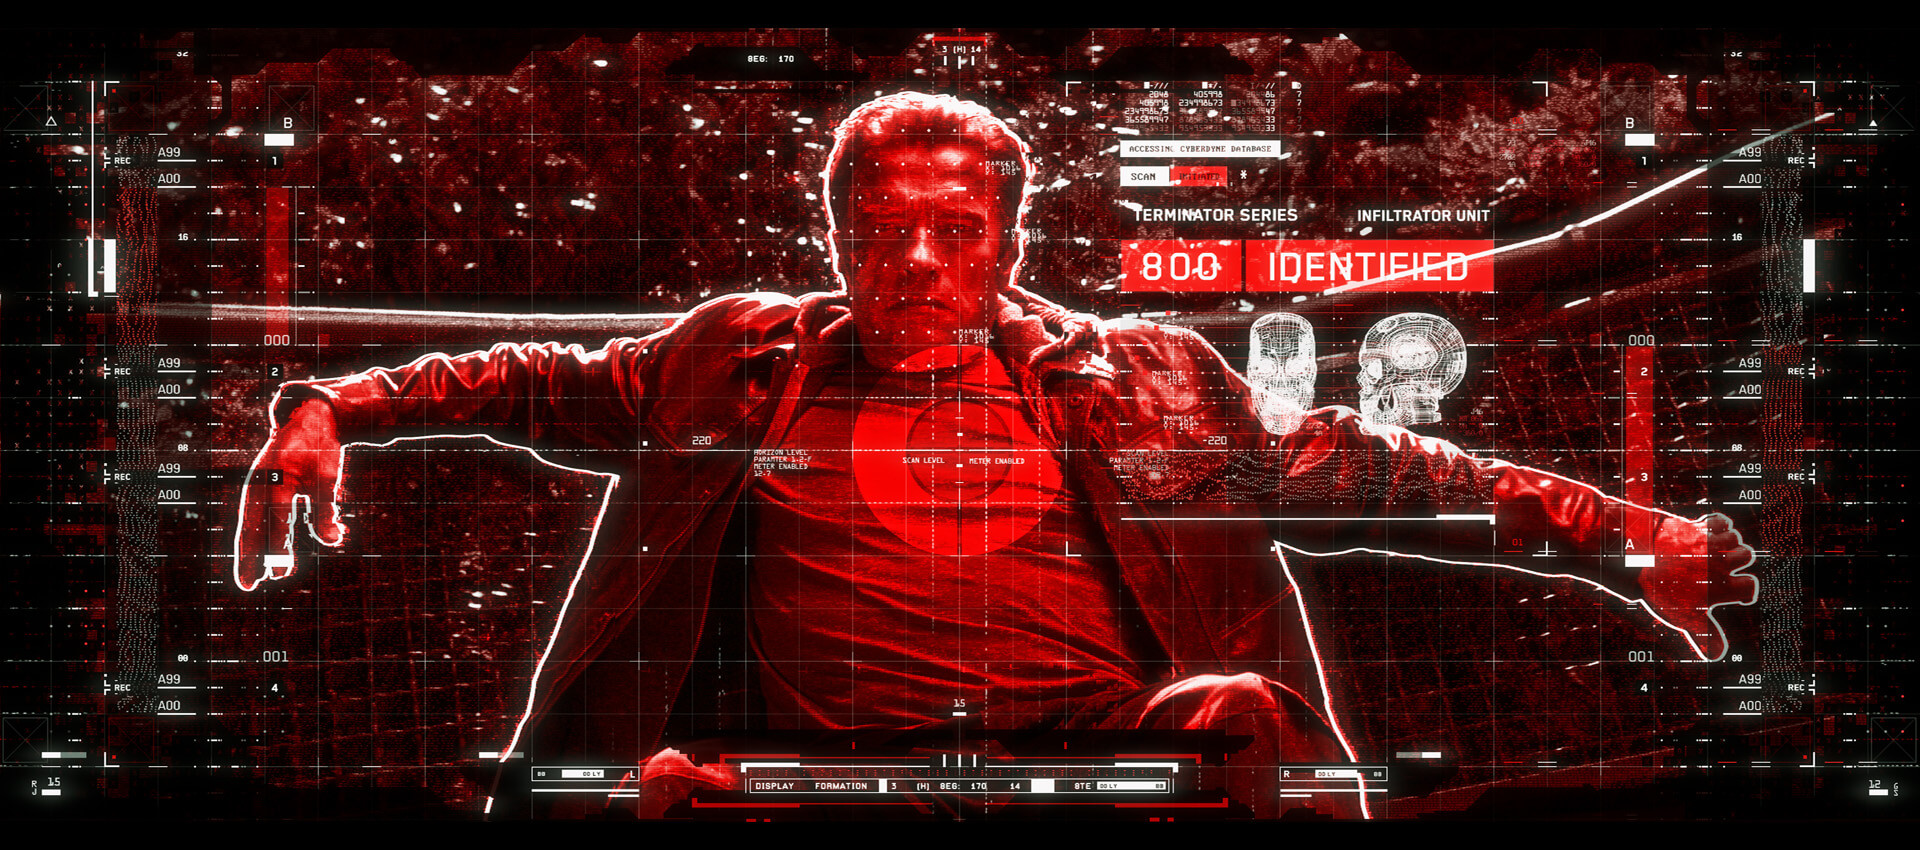 Terminator Genisys UI/UX inspiration: Movies every designer should watch